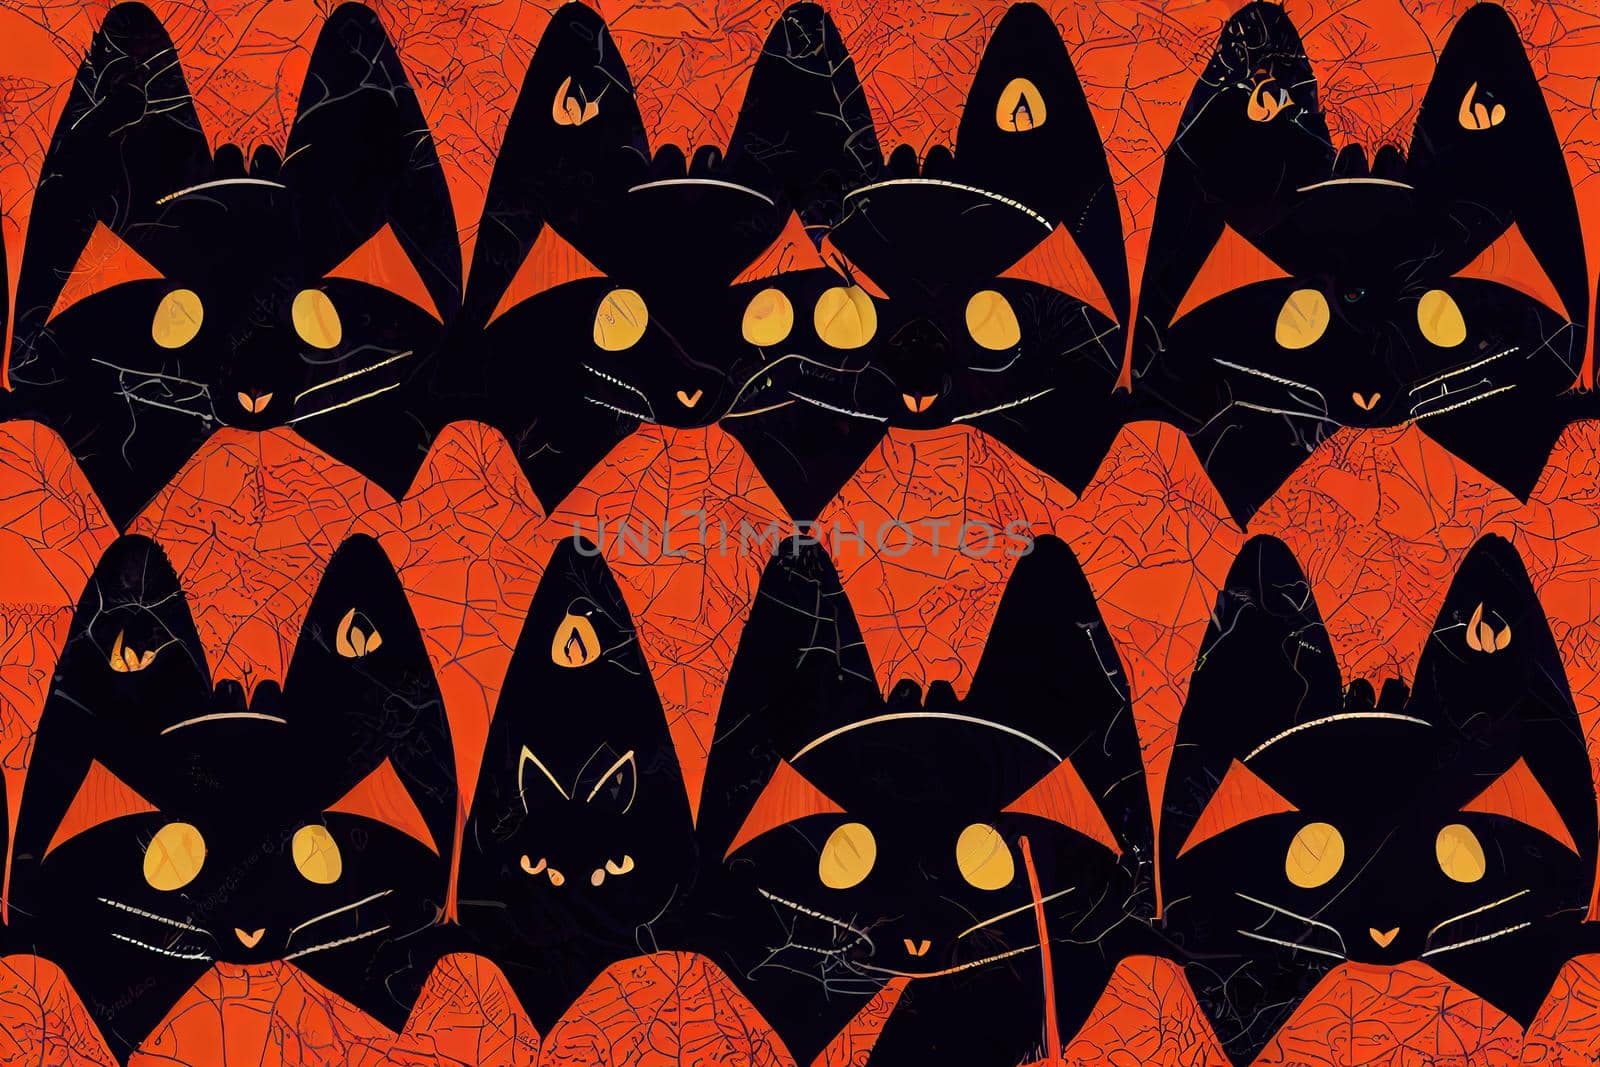 Black Cat and Spooky Halloween Pumpkin by 2ragon